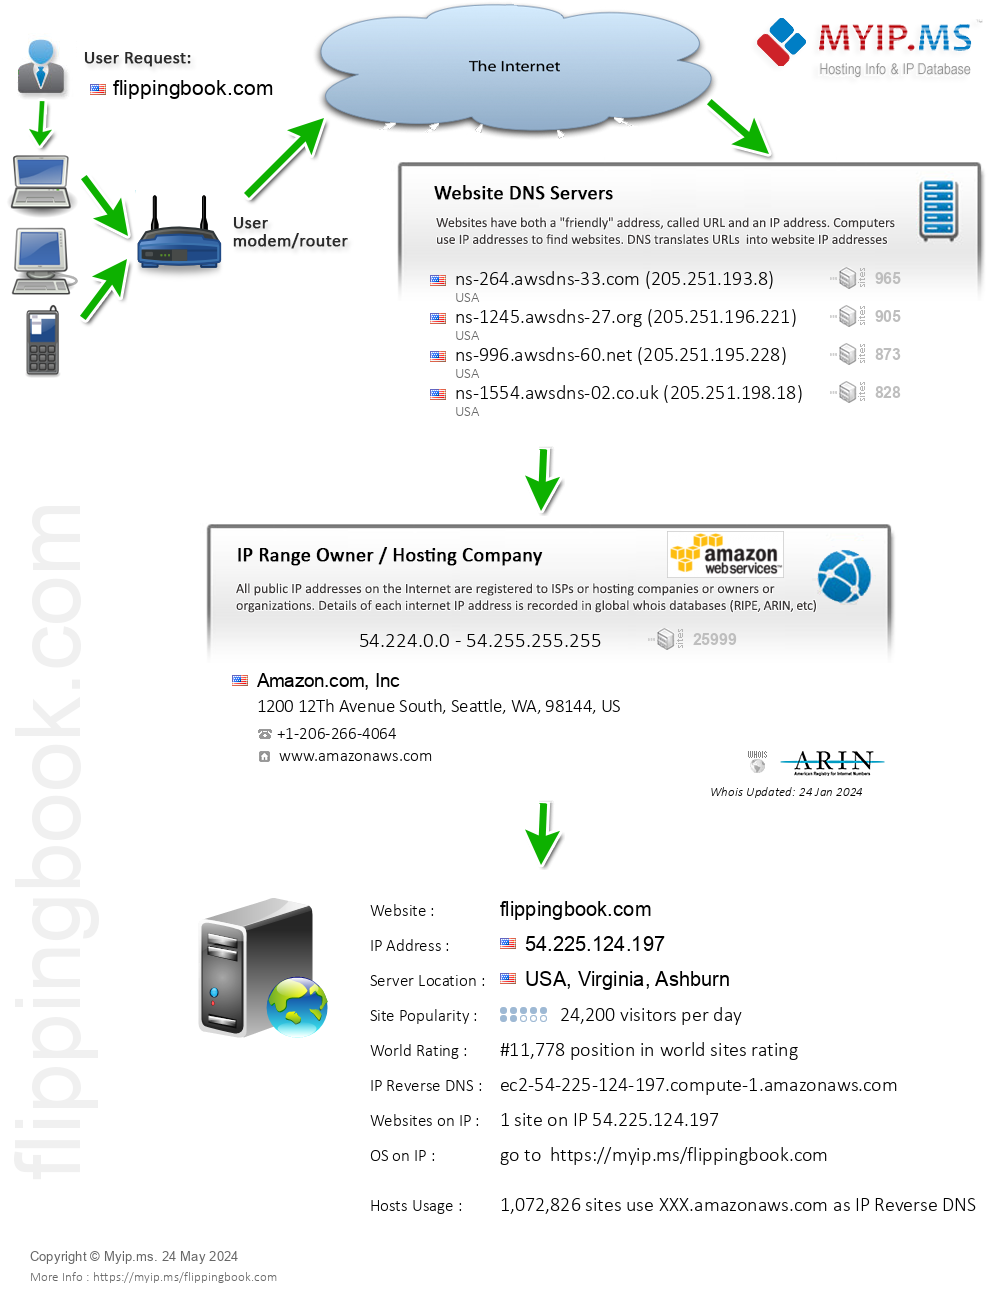 Flippingbook.com - Website Hosting Visual IP Diagram